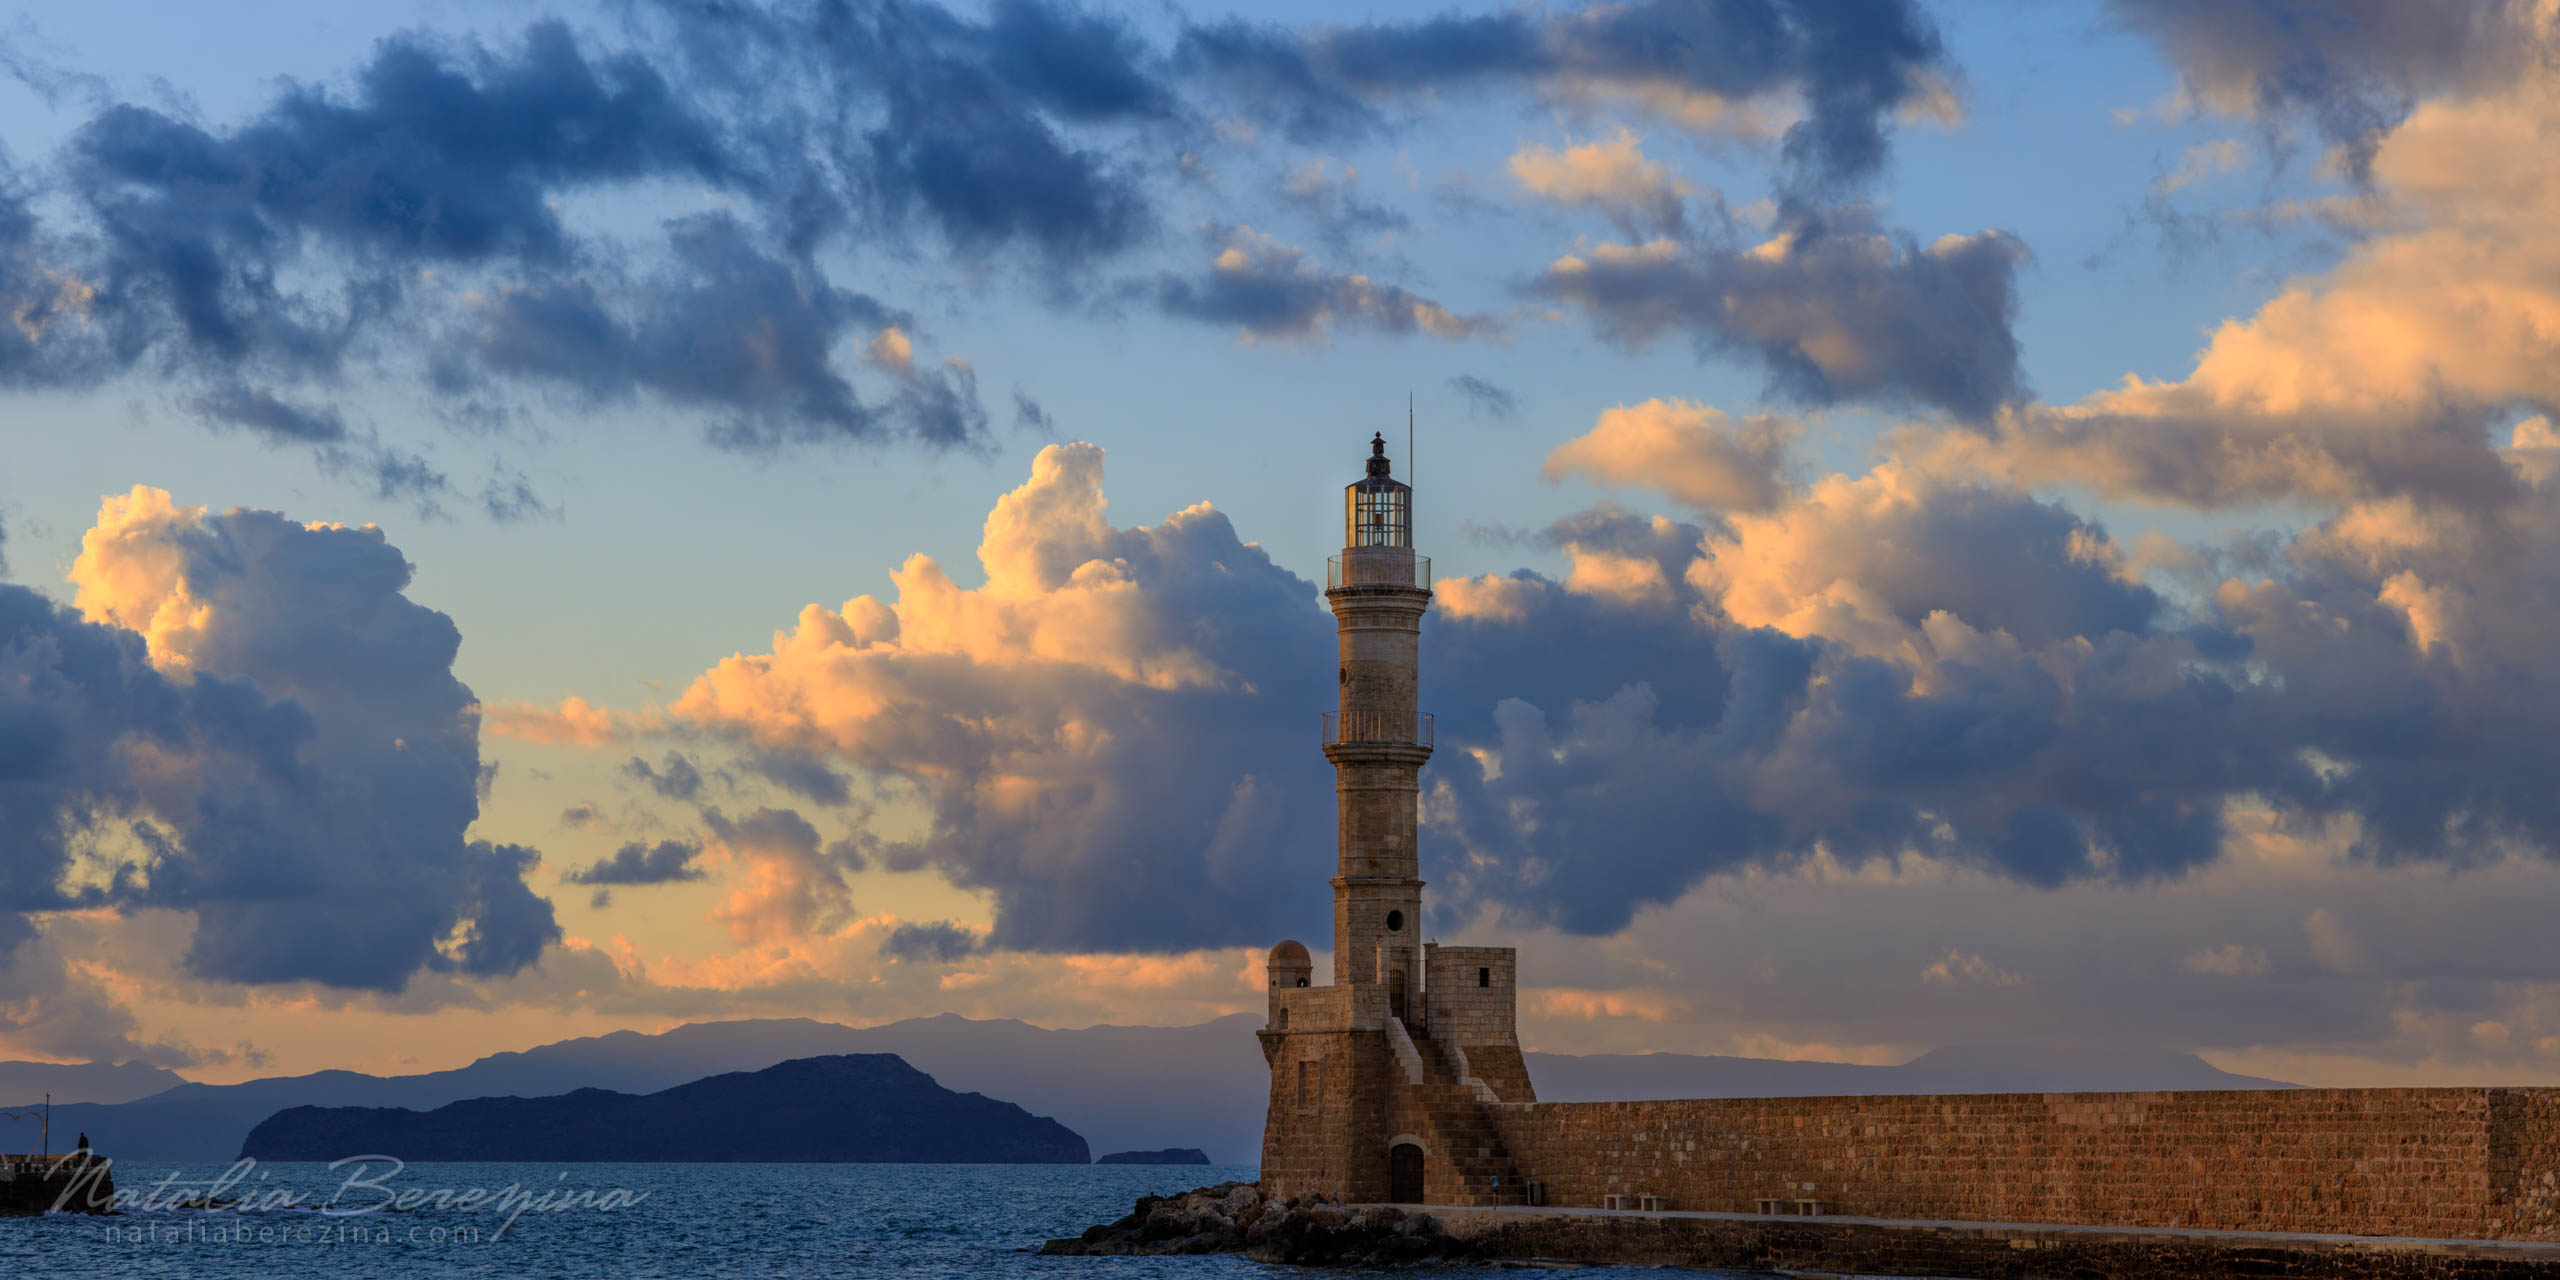 Greece, Crete, cityscape, sunset, skyline, cloud, lighthouse, 2x1 CR1-NB7B6A8871-P - Crete, Greece - Natalia Berezina Photography